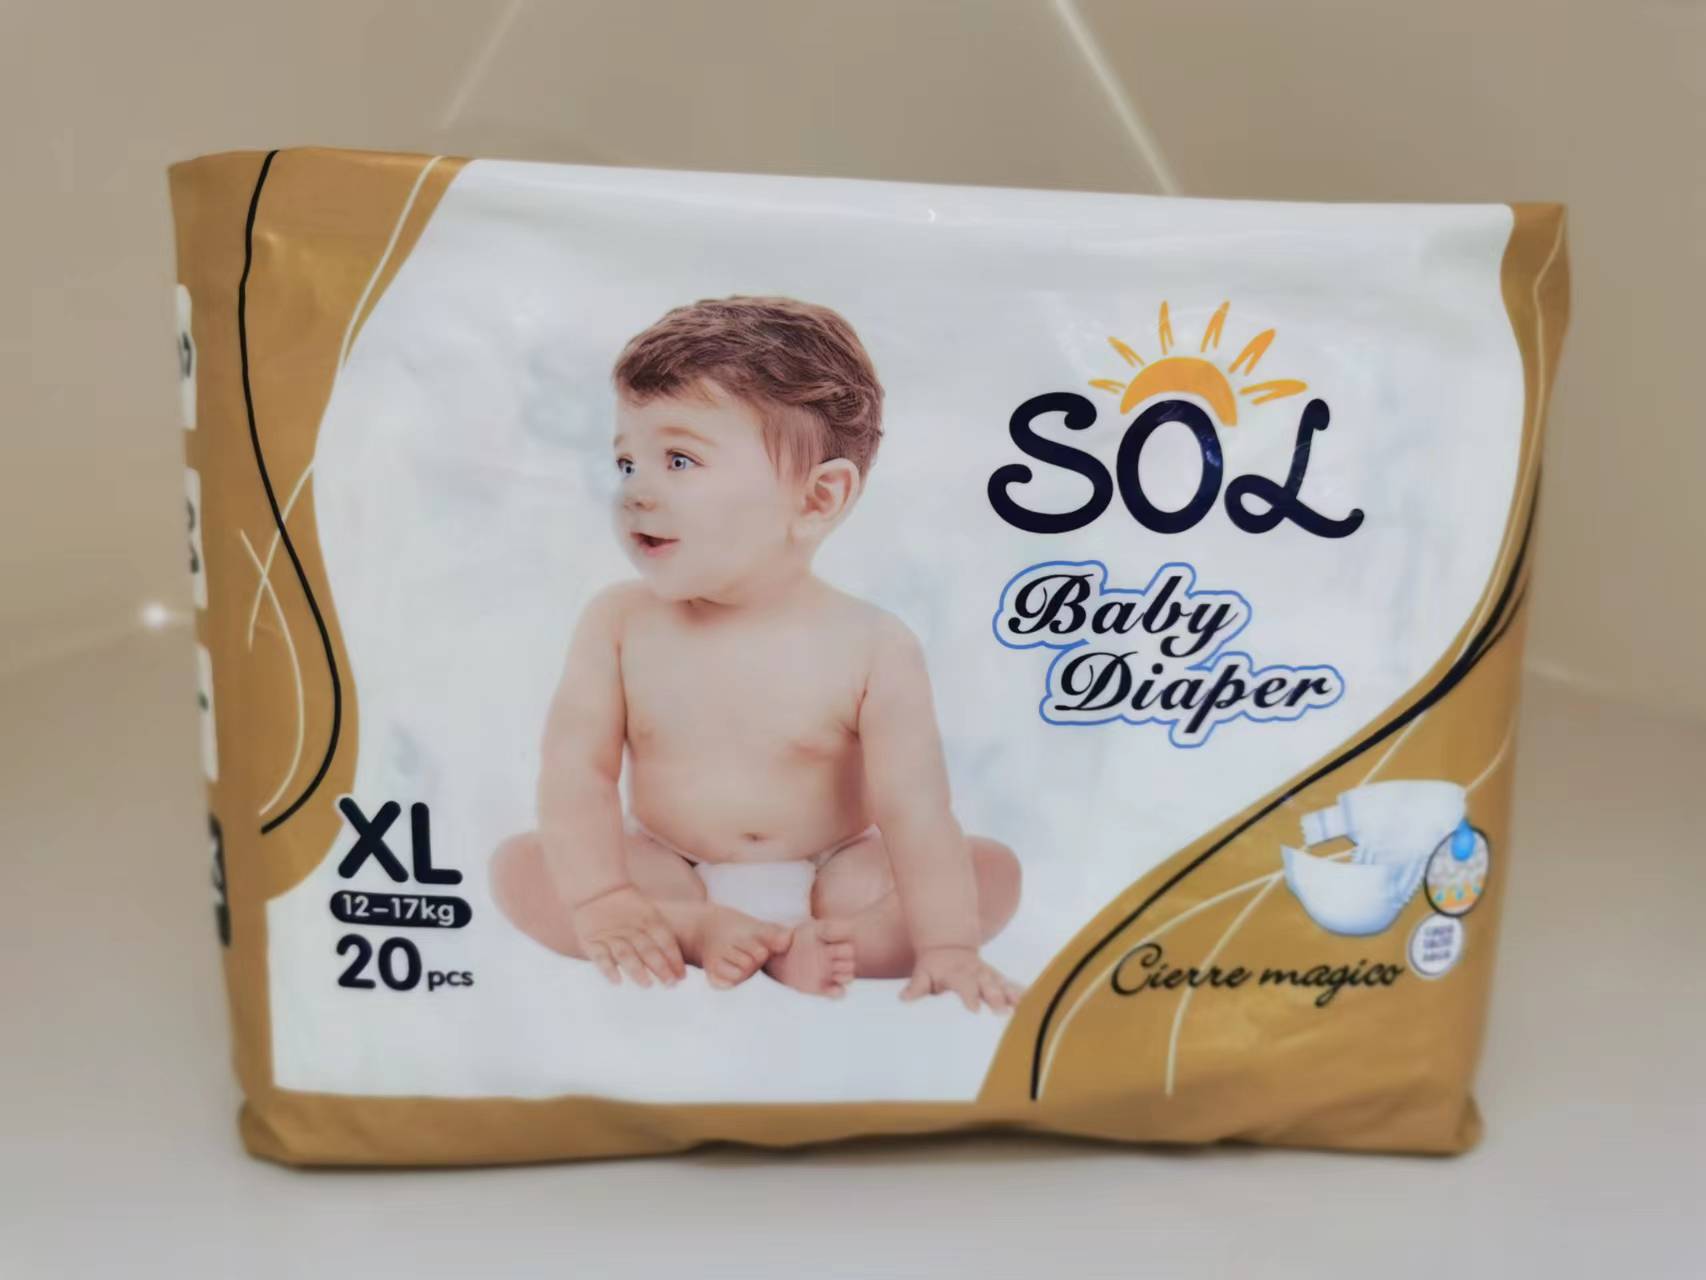 SOL baby diaper宝宝纸尿裤芯体结构亲肤柔棉超薄款瞬吸干爽男女婴儿通用款S M L XL